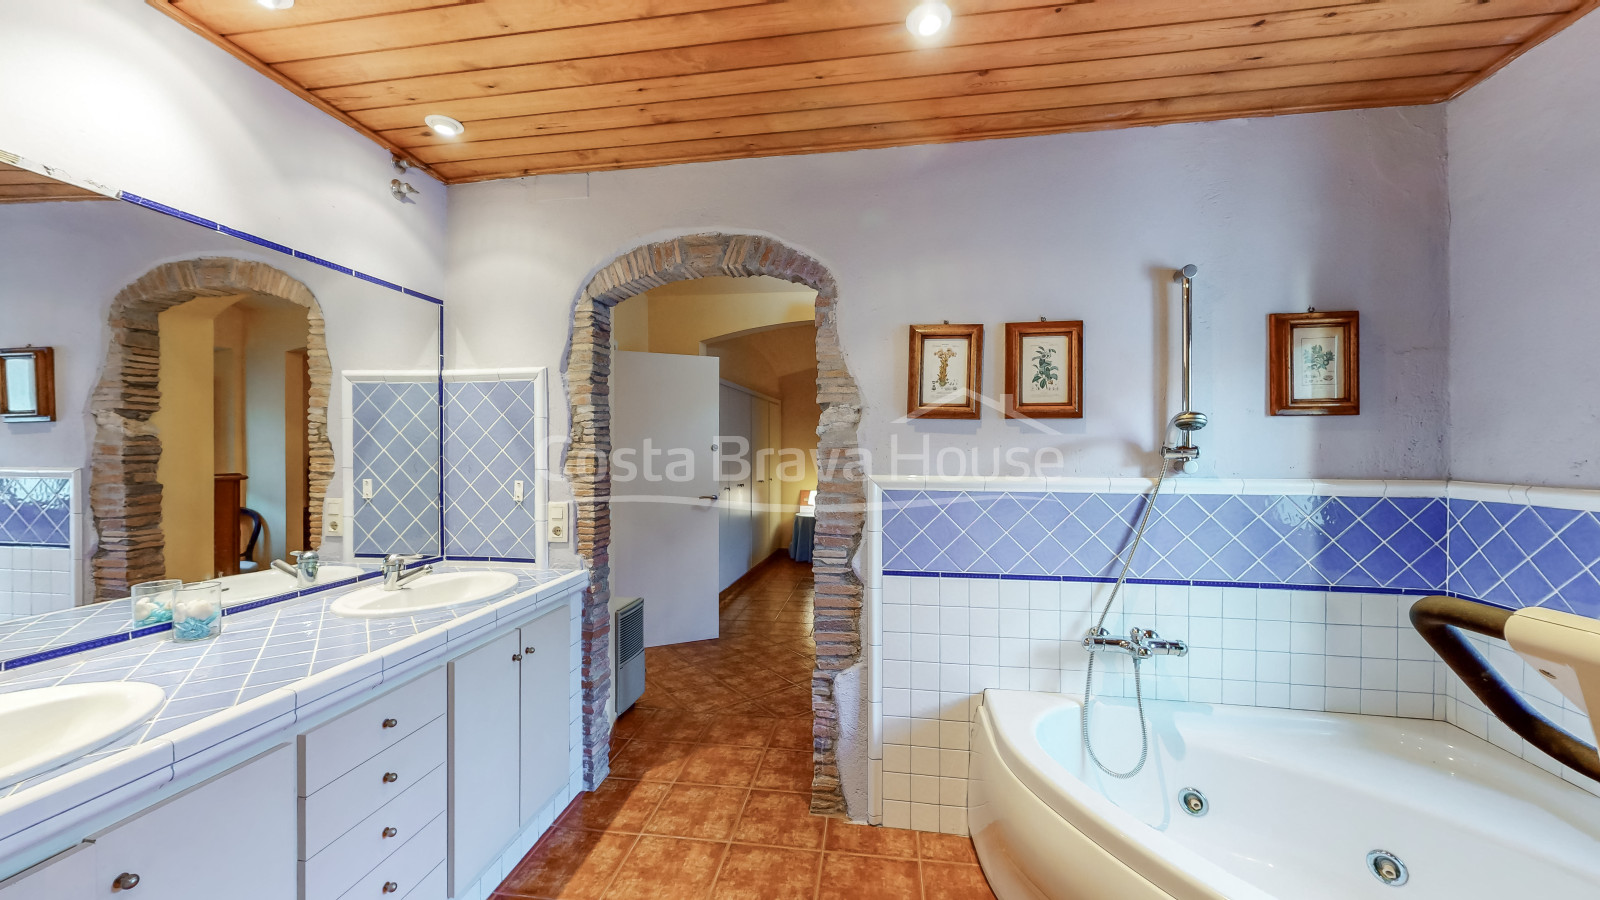 Refurbished Rustic House for Sale in Begur, Costa Brava